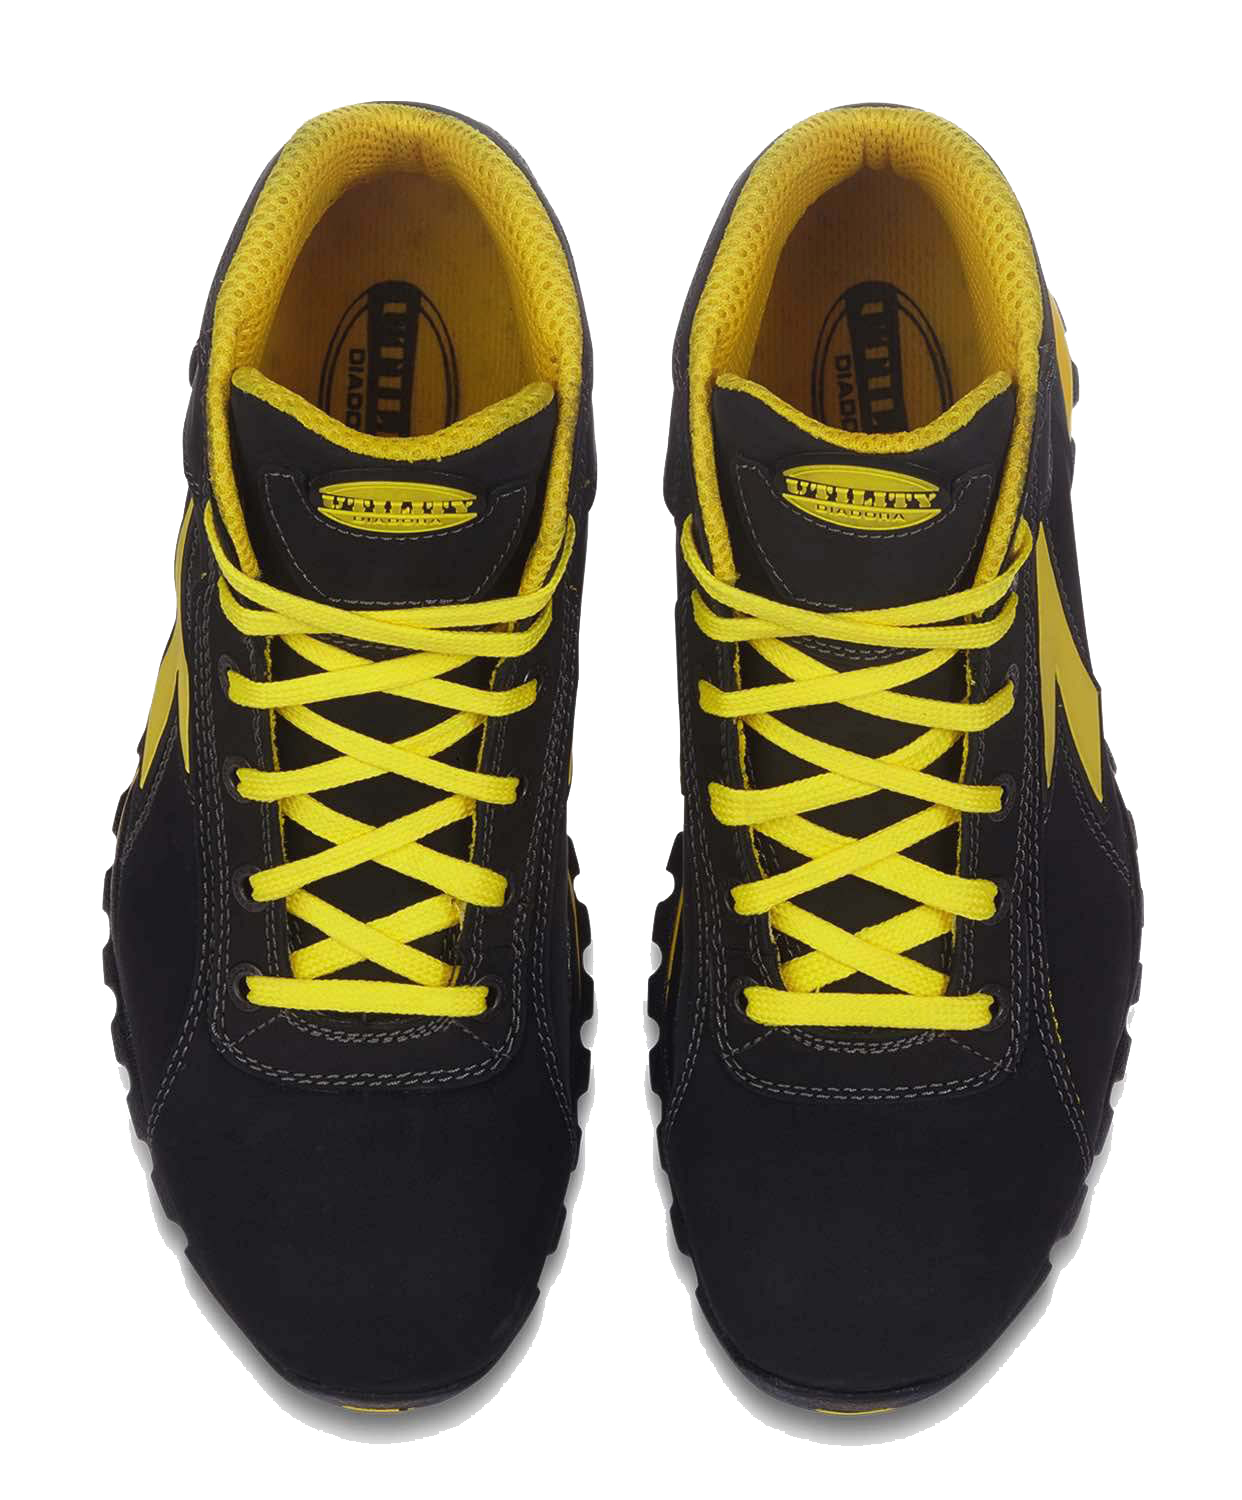 Chaussures de sécurité hautes GLOVE II HIGH S3 SRA HRO noir/jaune P43 - DIADORA SPA - 701.170234